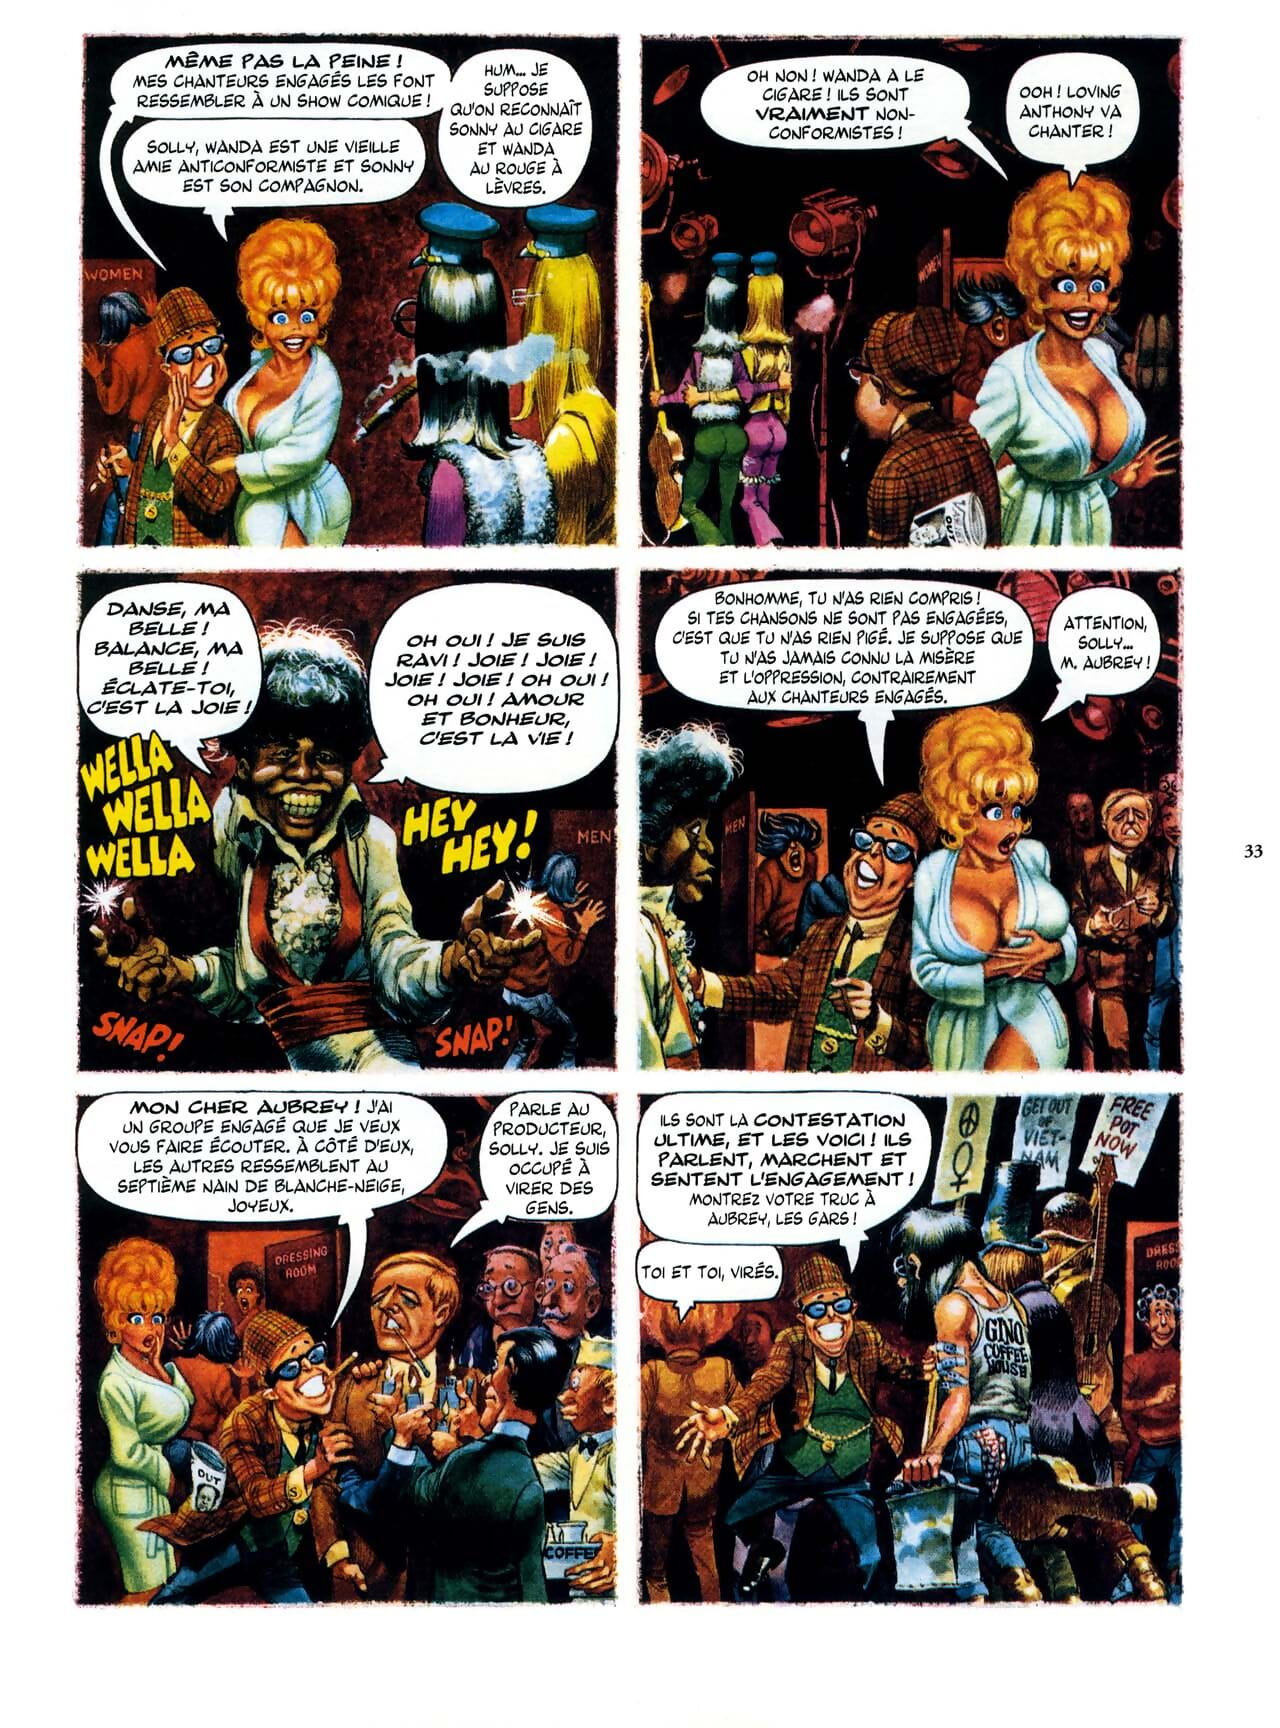 Playboys Little Annie Fanny Vol. 2 - 1965-1970 - part 2 page 1